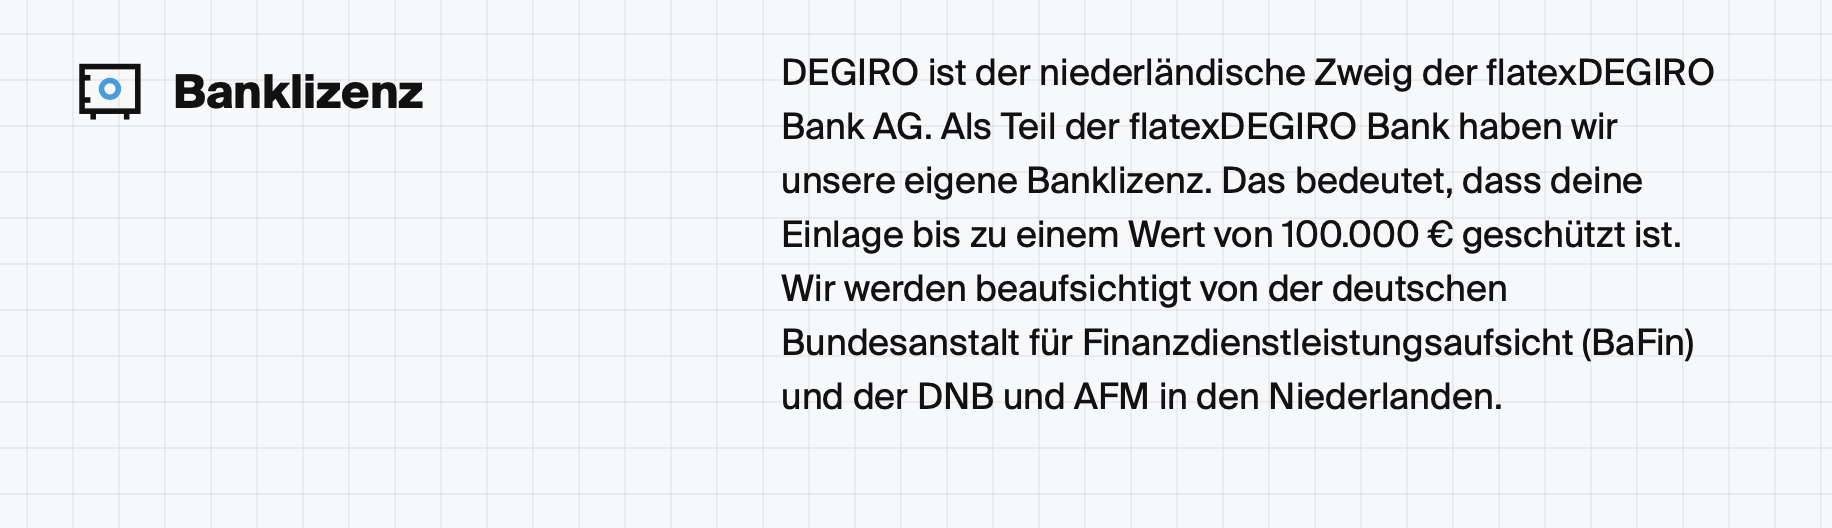 Degiro Banklizenz